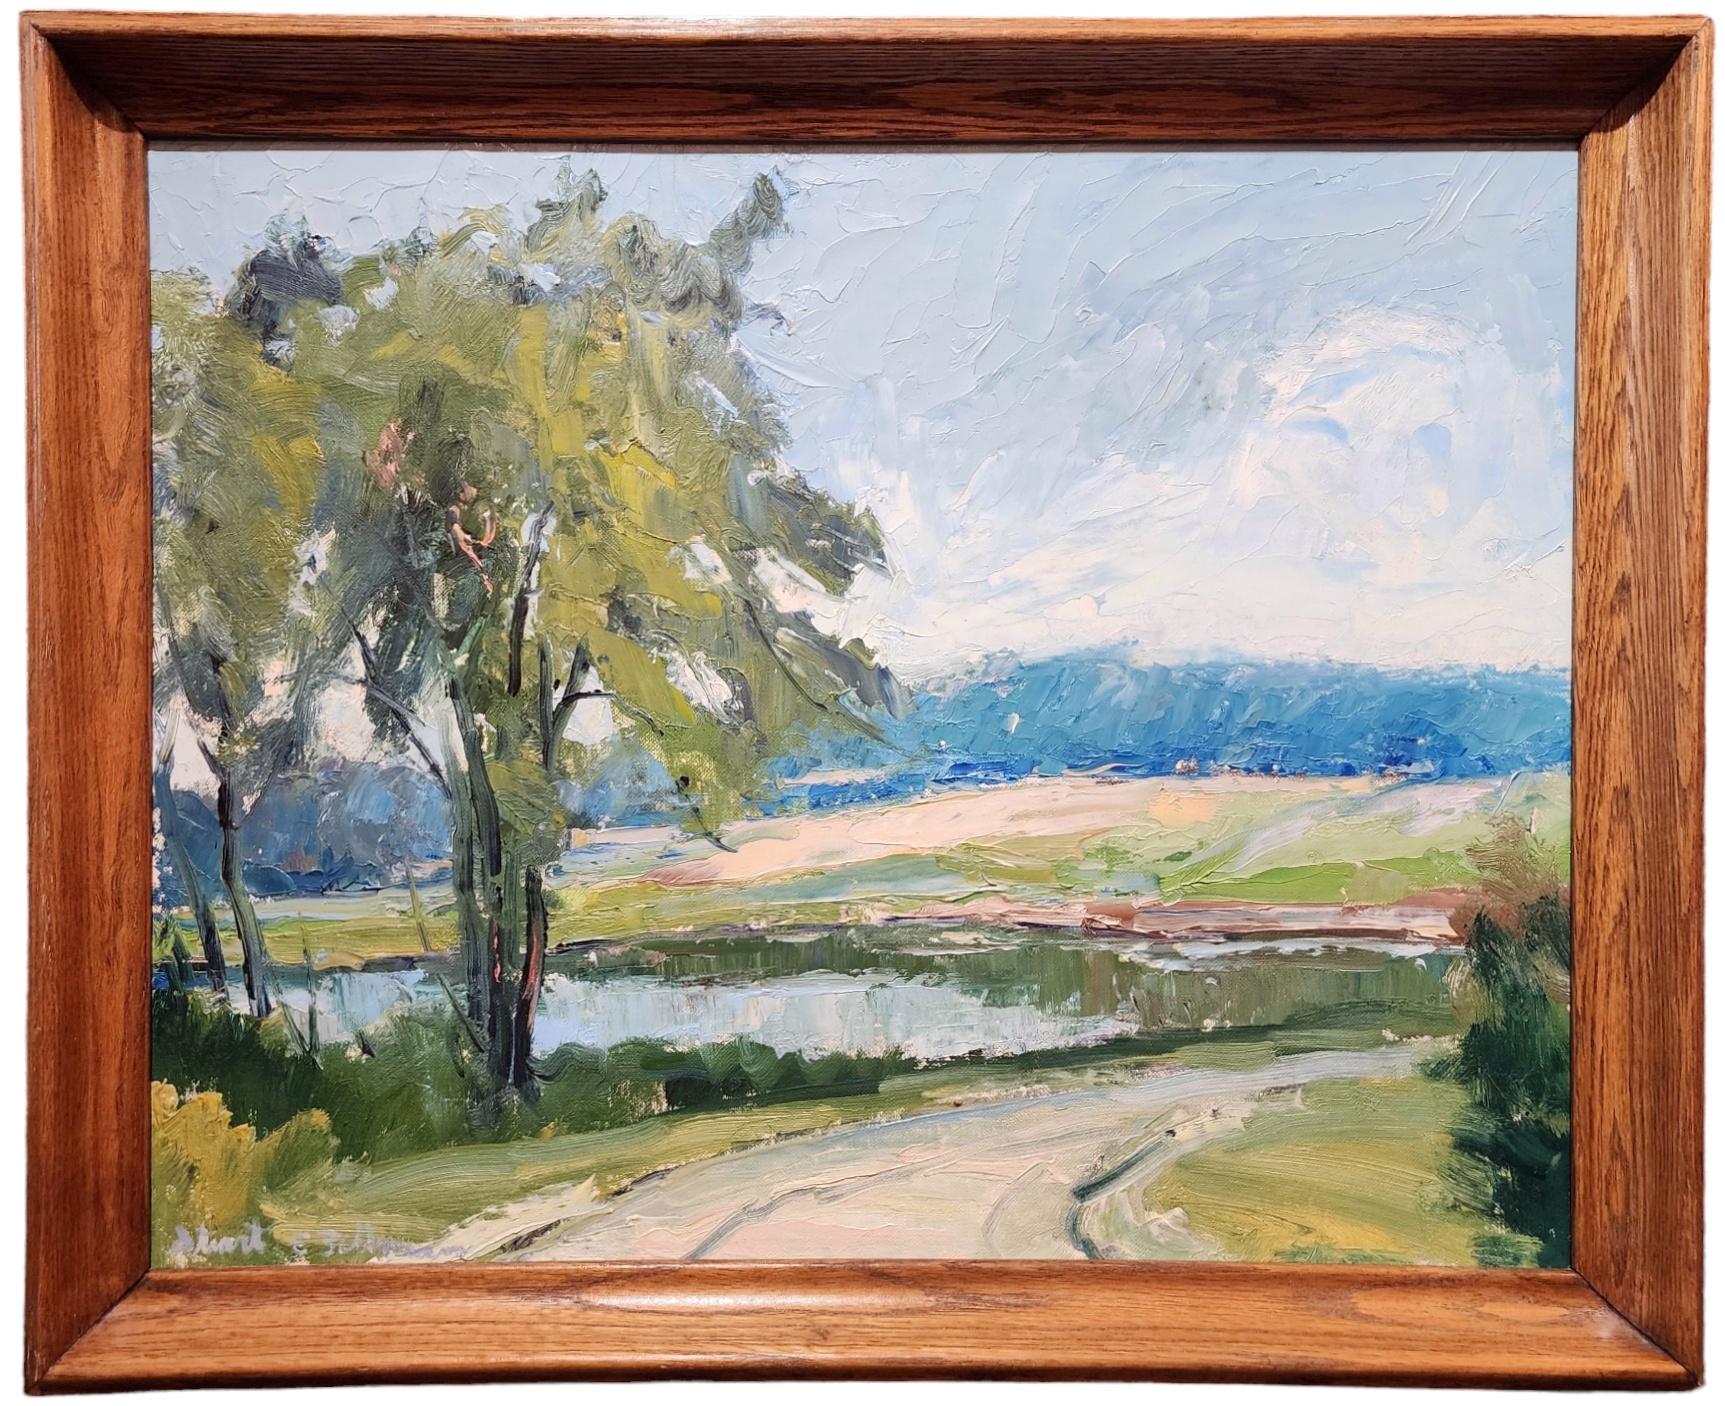 Stuart E. Zillman Landscape Painting - The Pond, Godfrey's Pond, Batavia, New York, Stafford, American Landscape